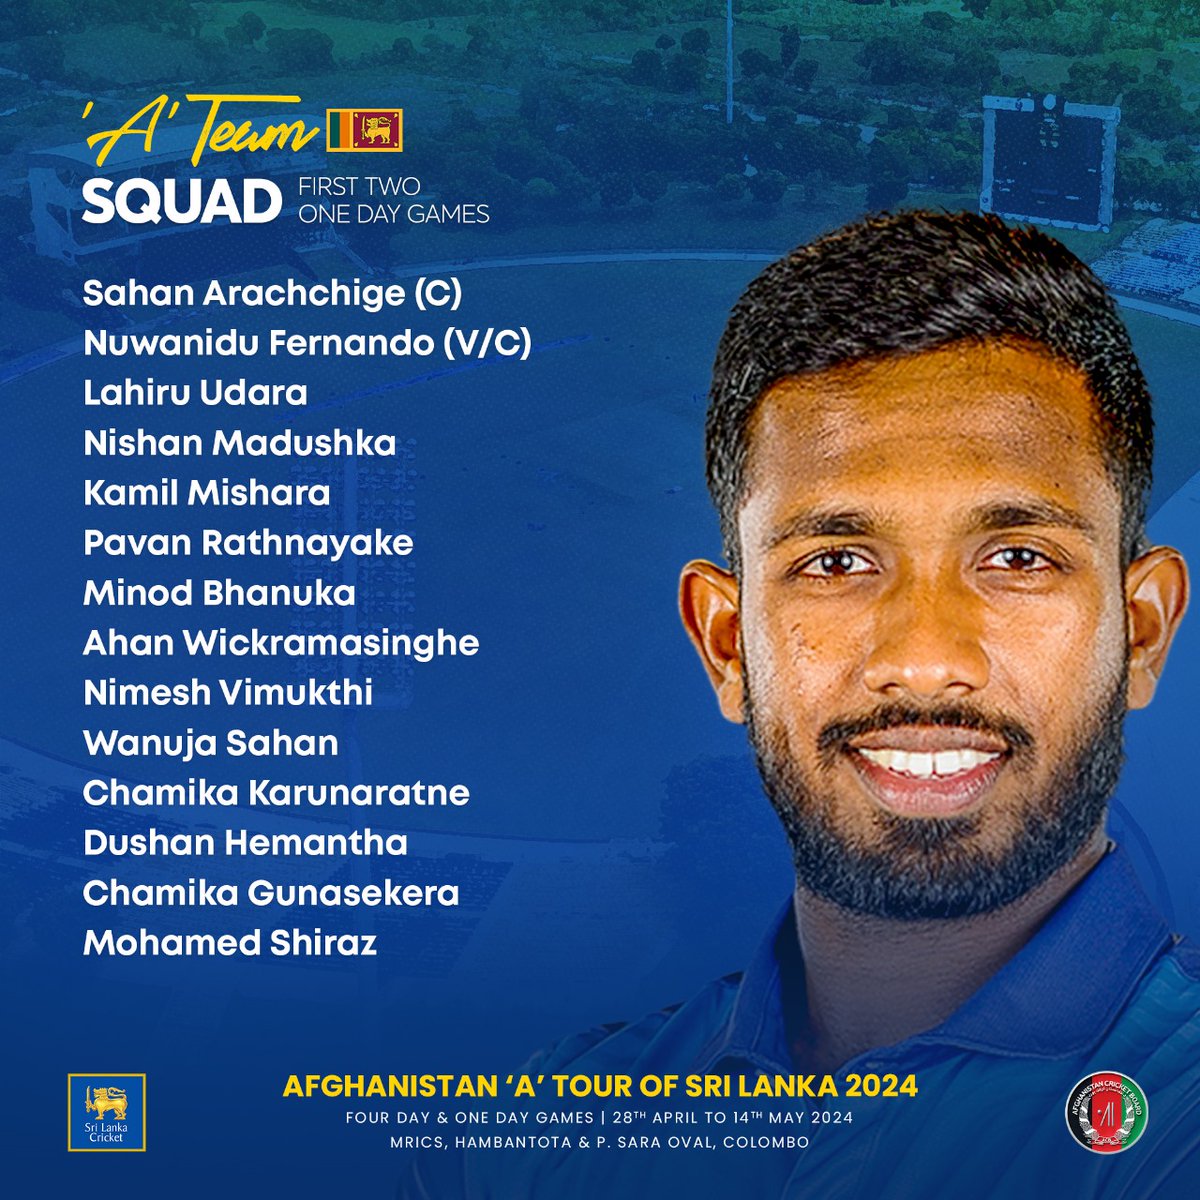 14-Member Sri Lanka 'A' Team Selected for First Two ODIs Against Afghanistan 'A' Team. 

#SLATeam #SLvAFG